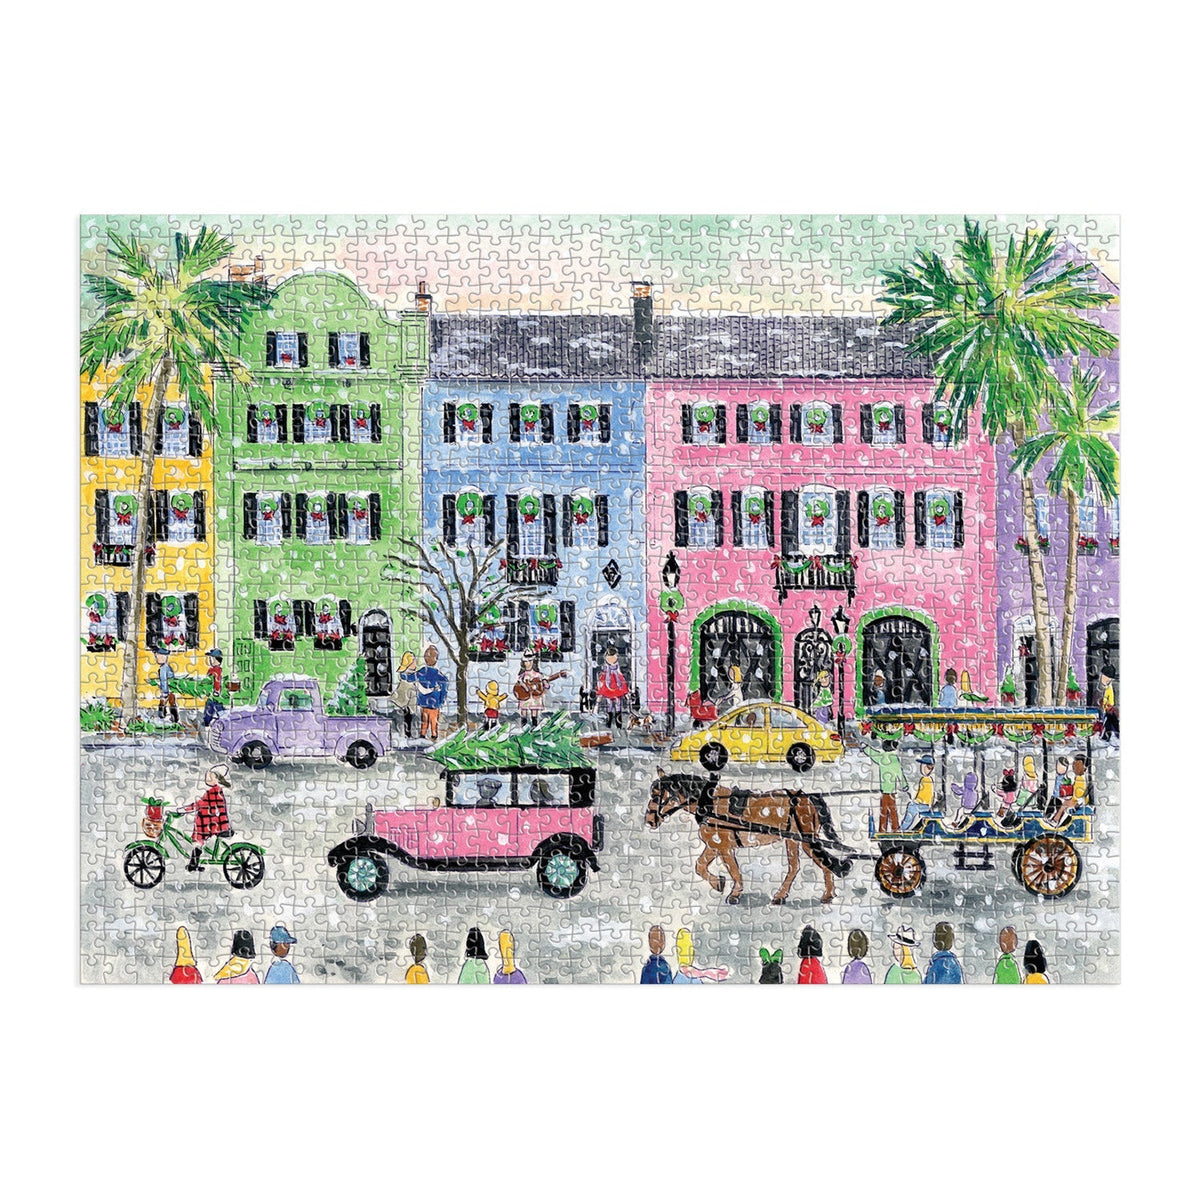 Michael Storrings Christmas in Charleston 1000 Piece Puzzle